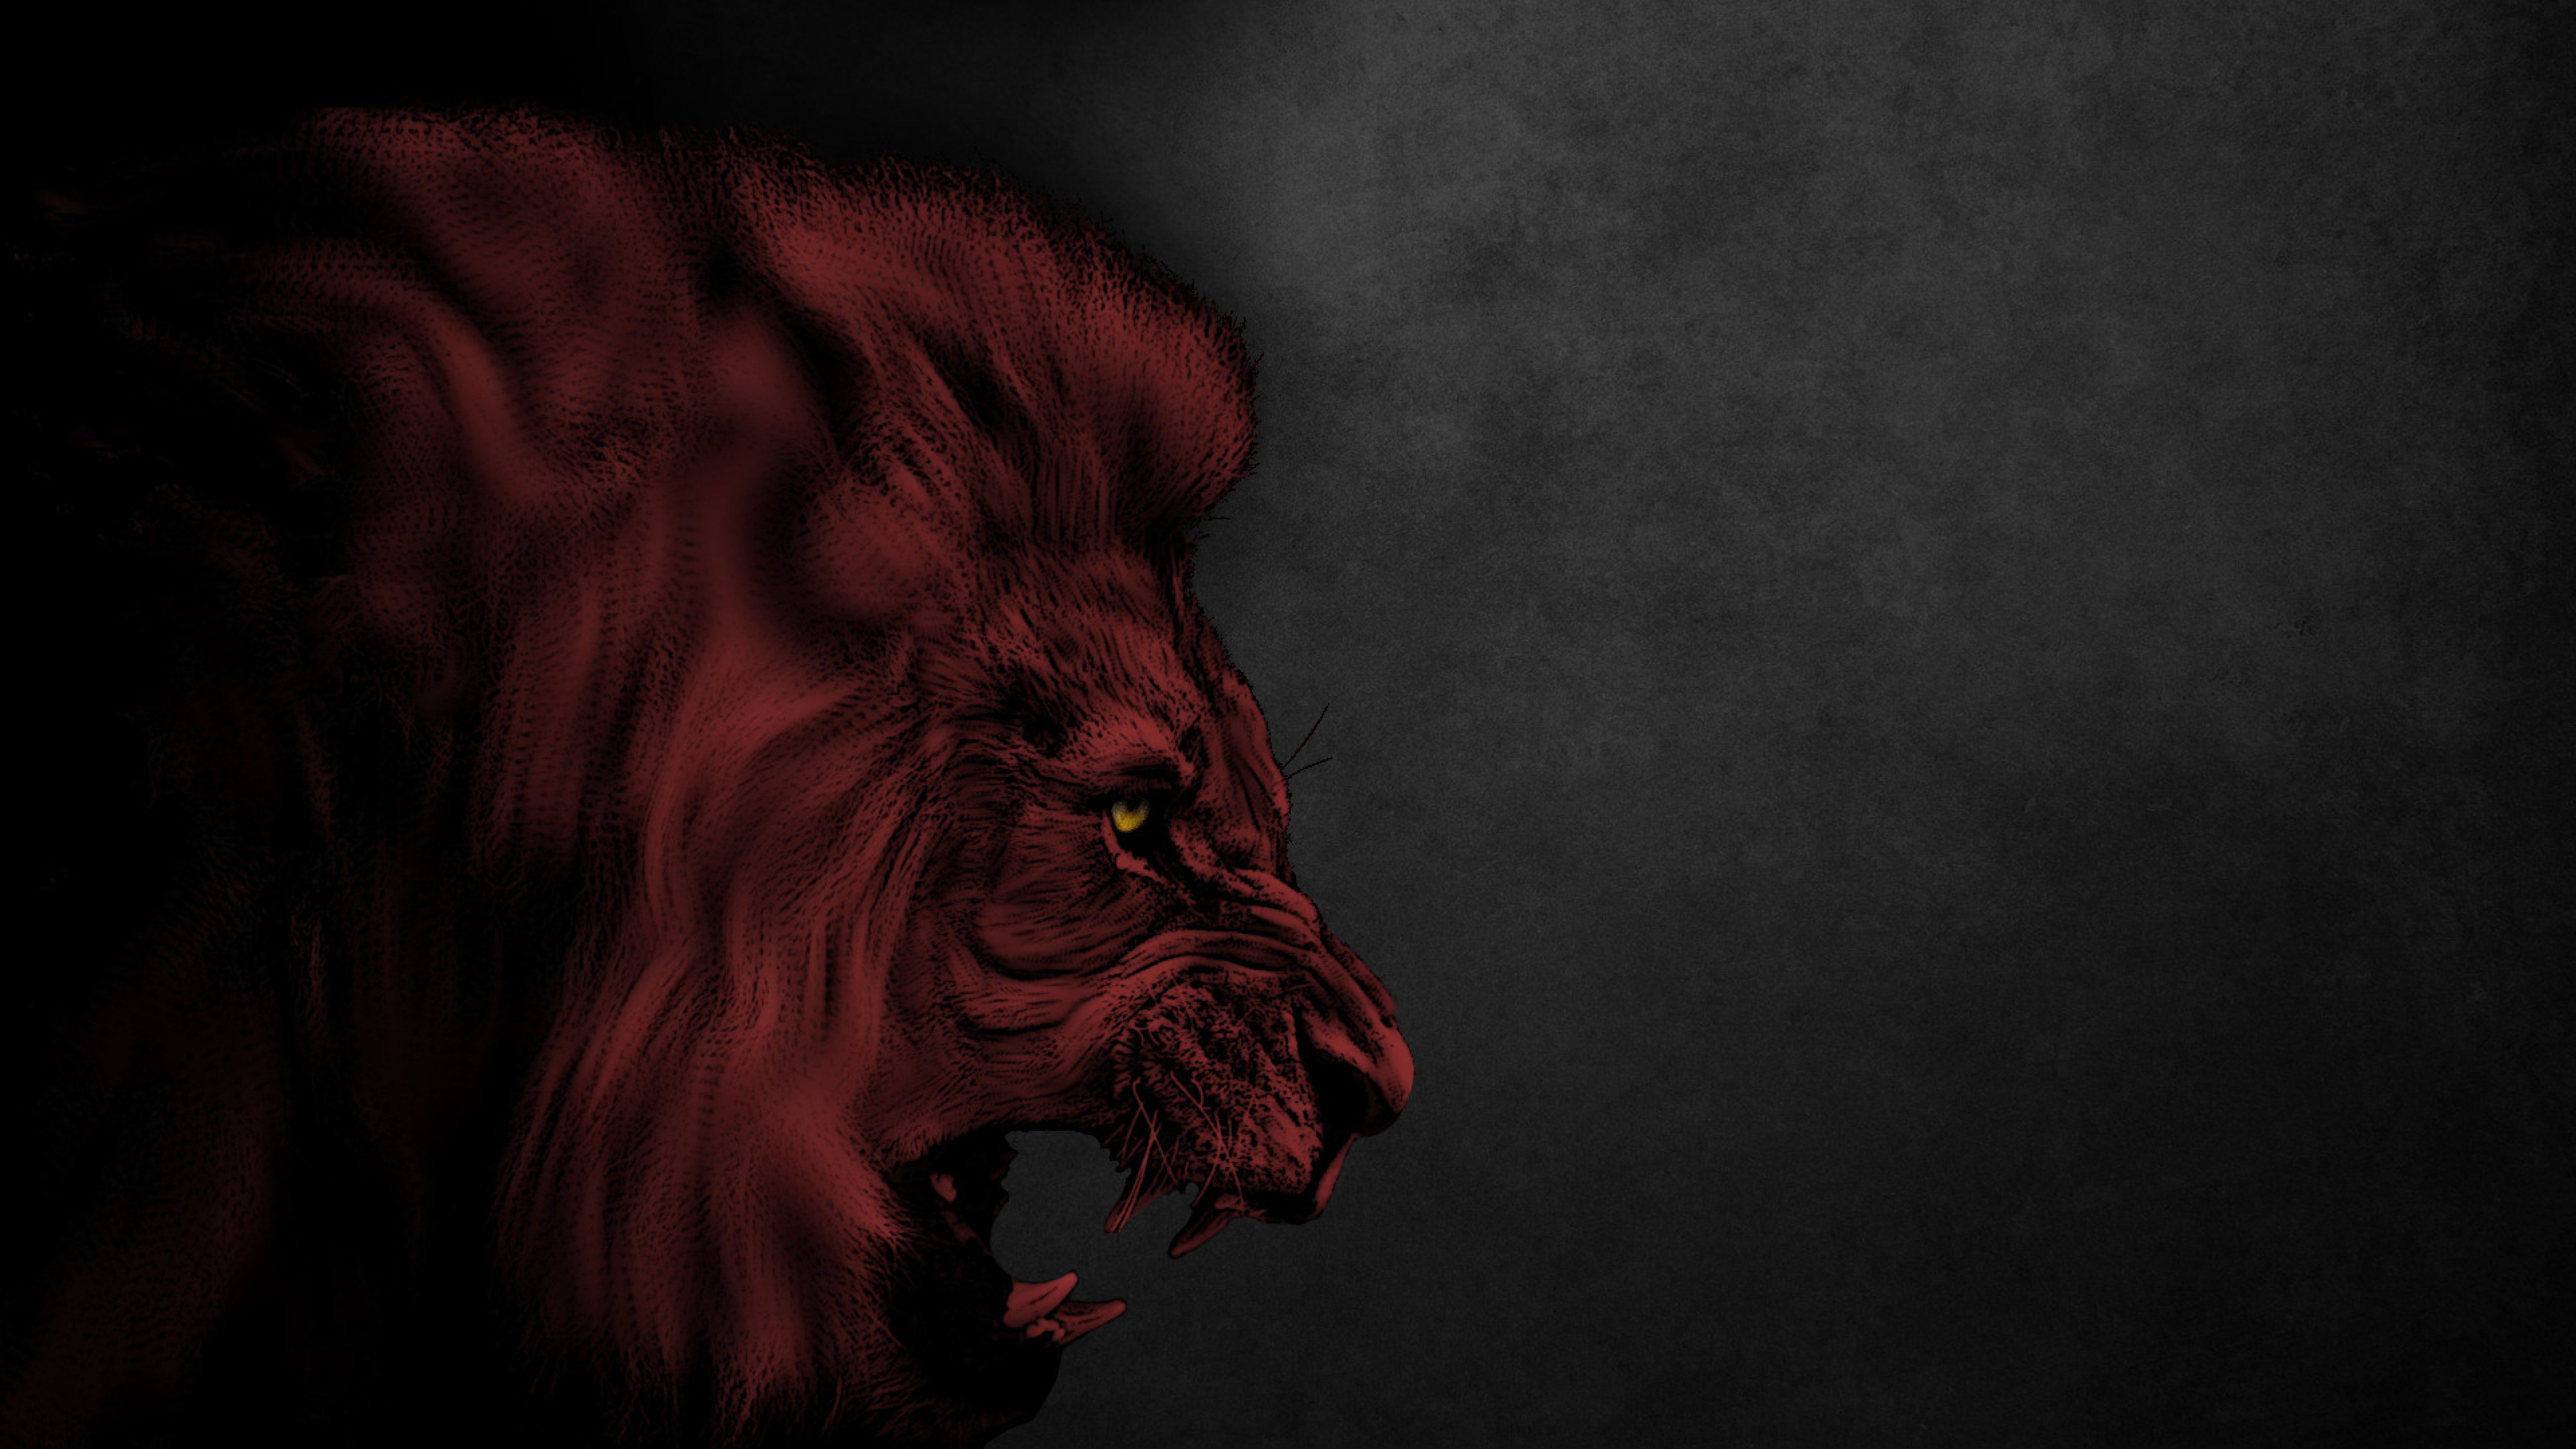 Red Lion Art 5K Wallpaper, HD Artist 4K Wallpaper, Image, Photo and Background